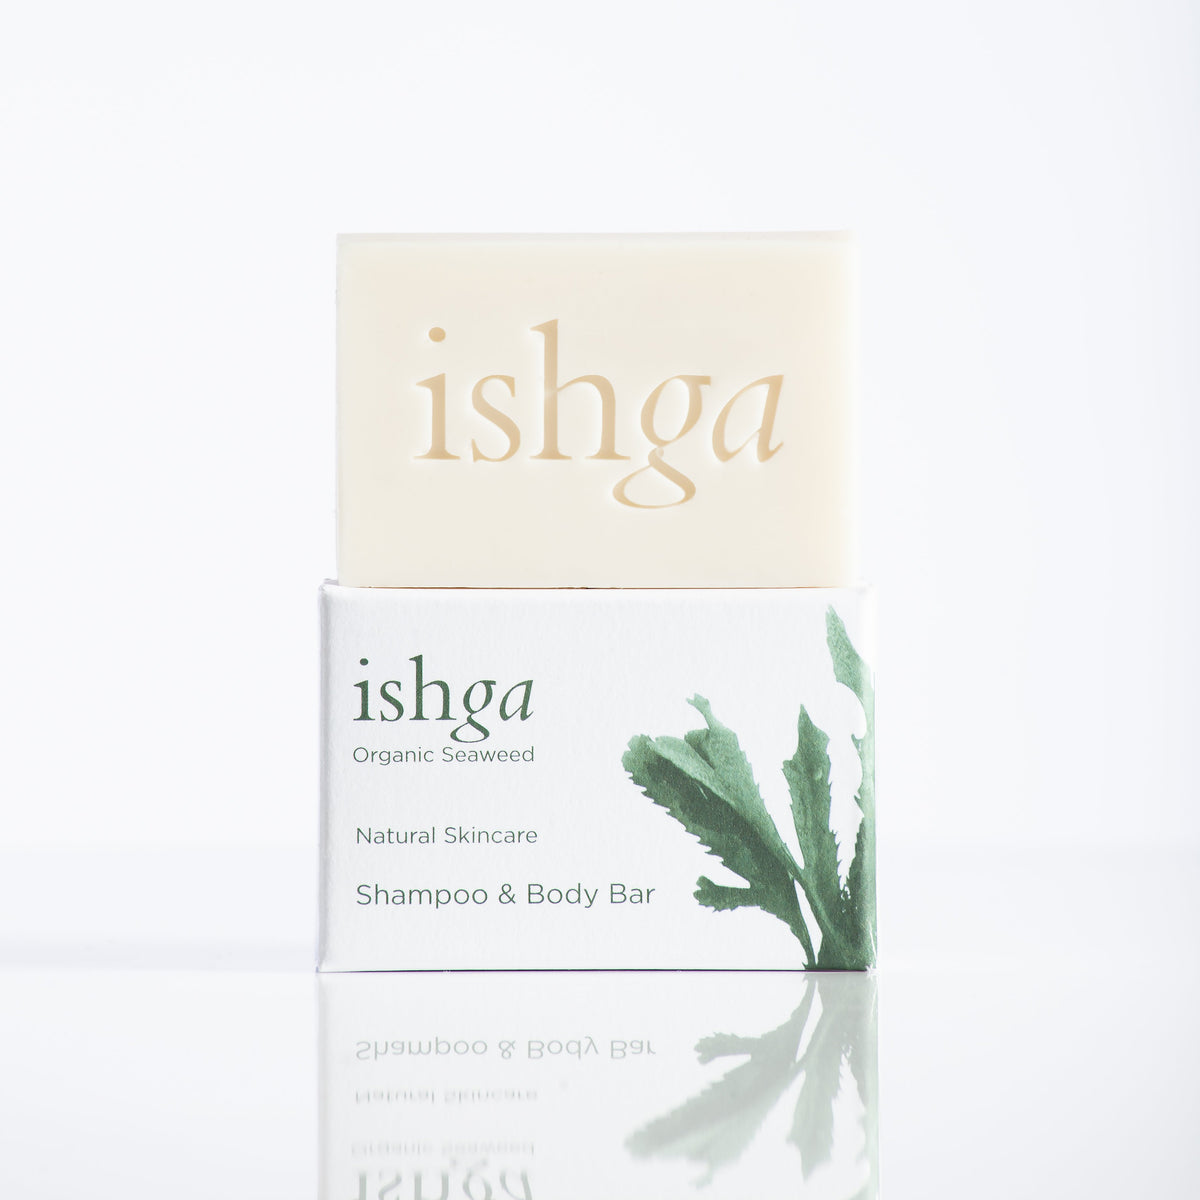 ishga Shampoo &amp; Body Bar on top of its box